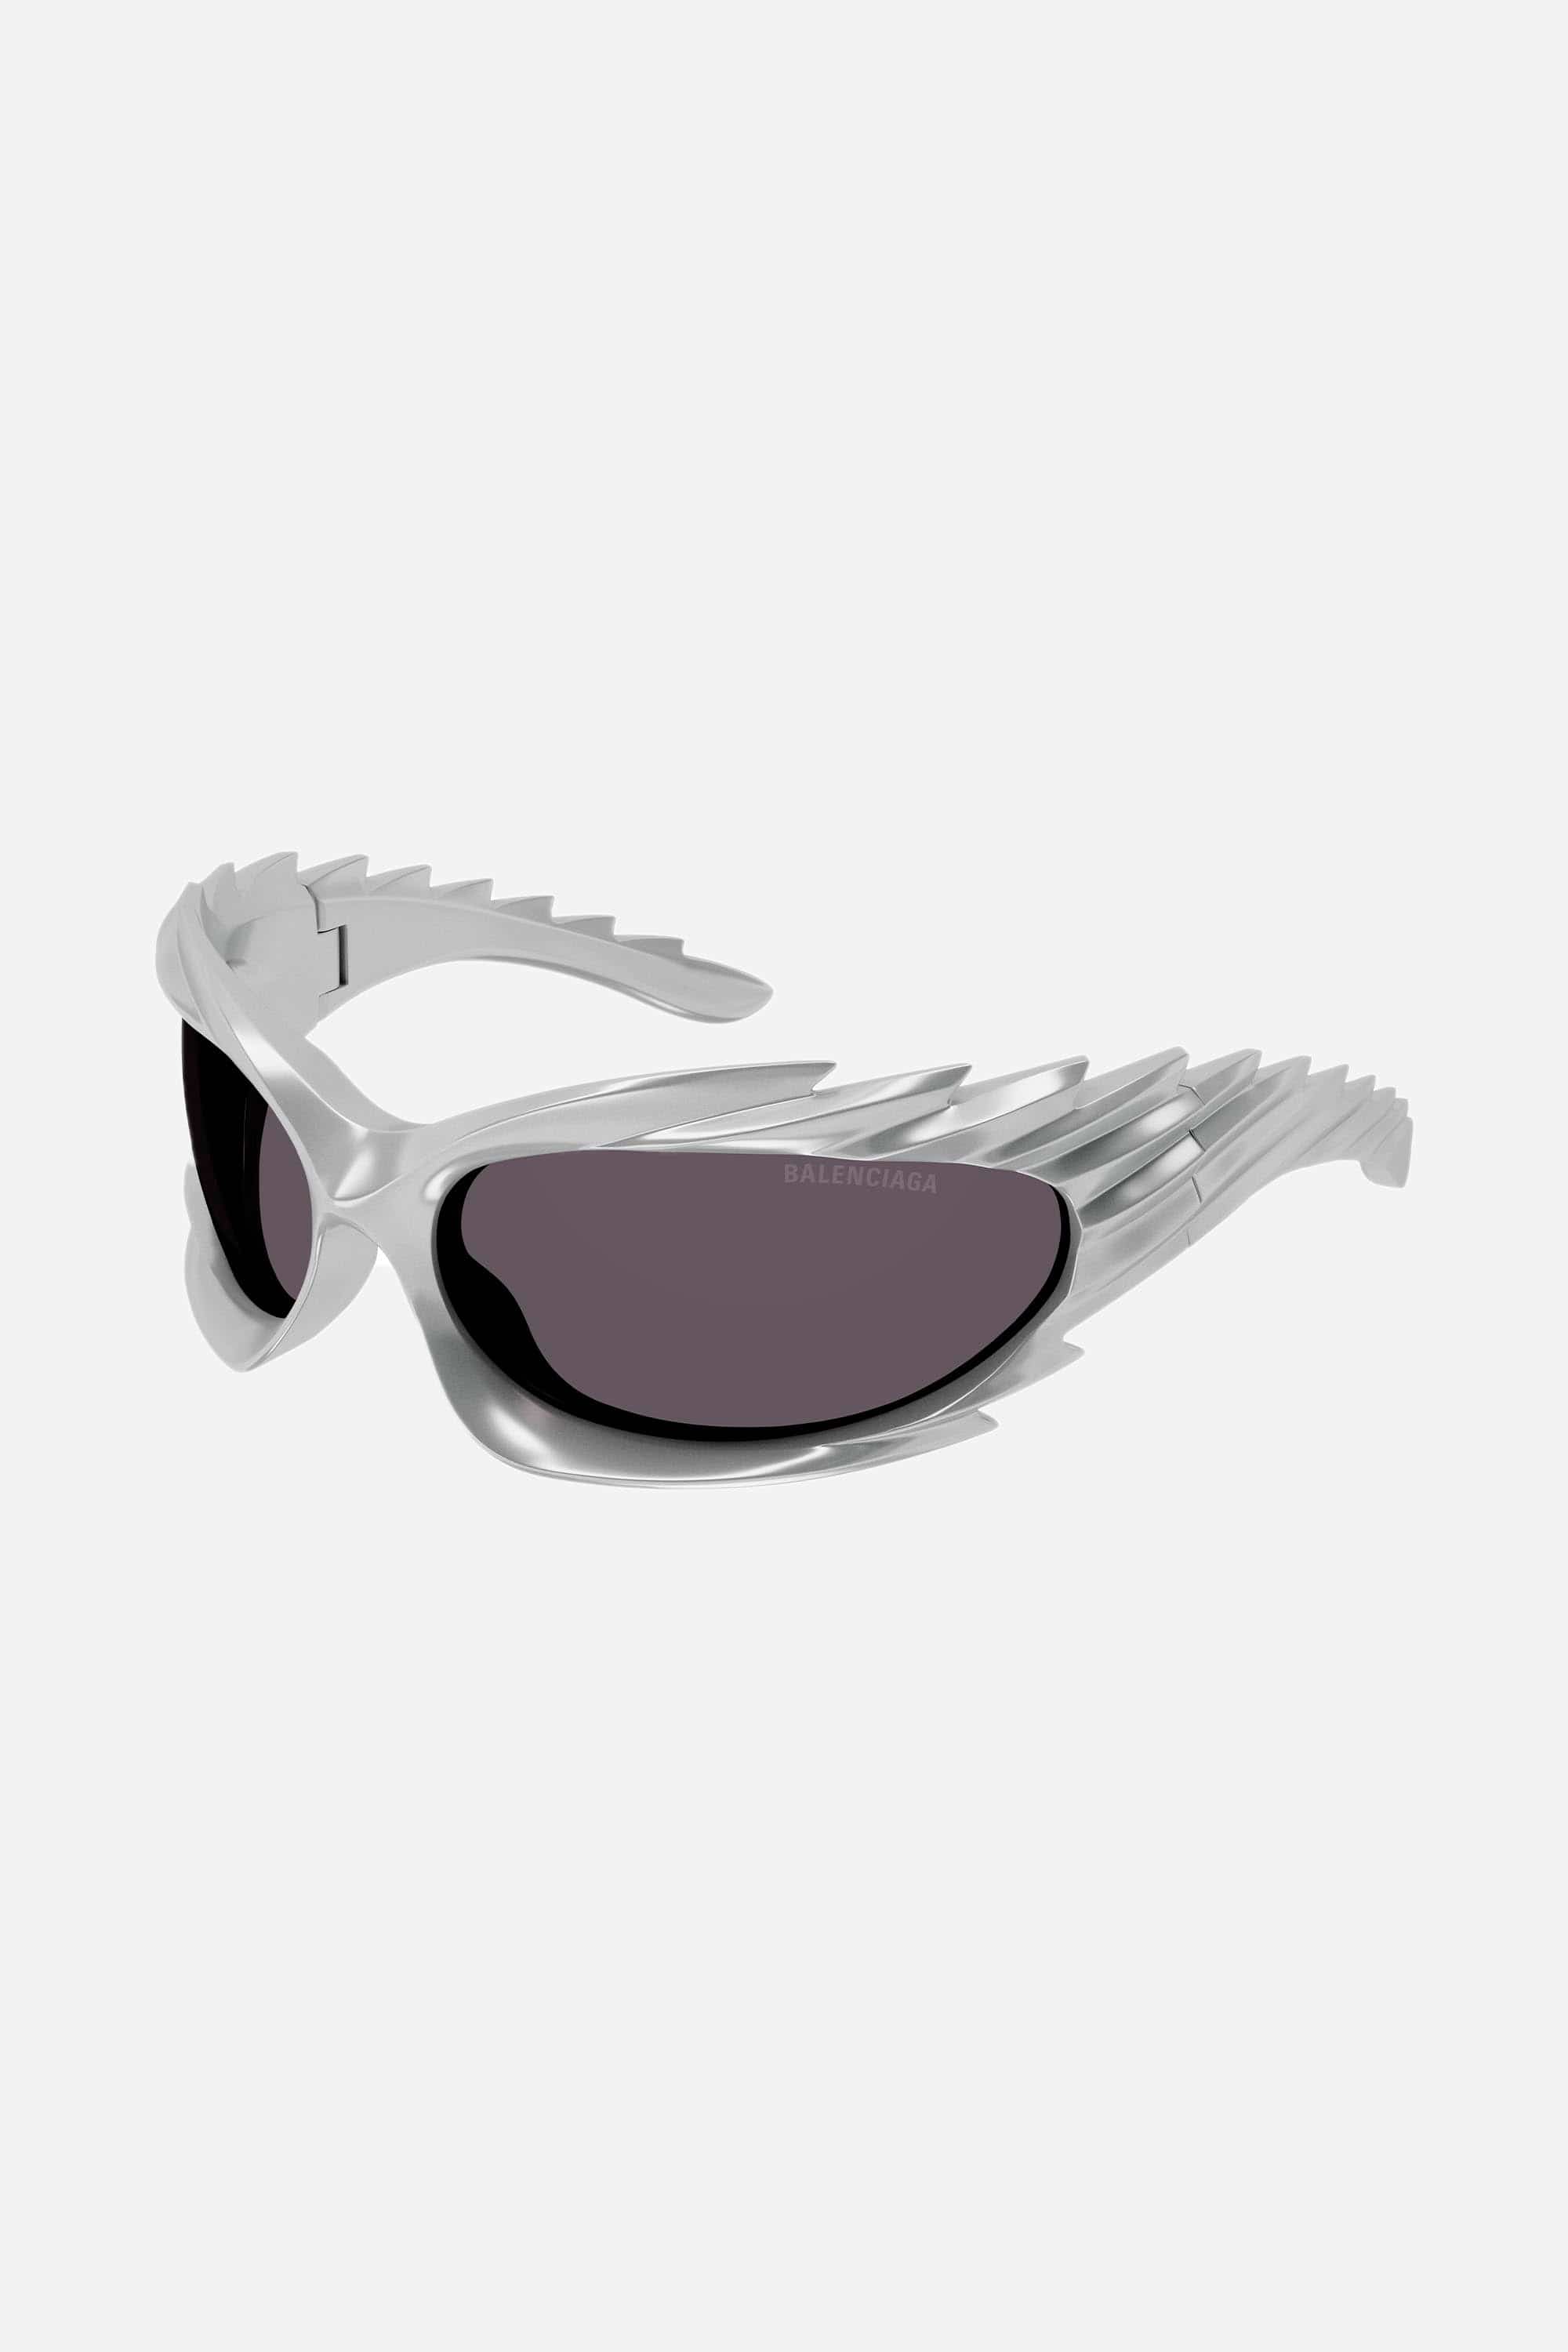 Balenciaga Spike rectangle sunglasses in grey - Eyewear Club